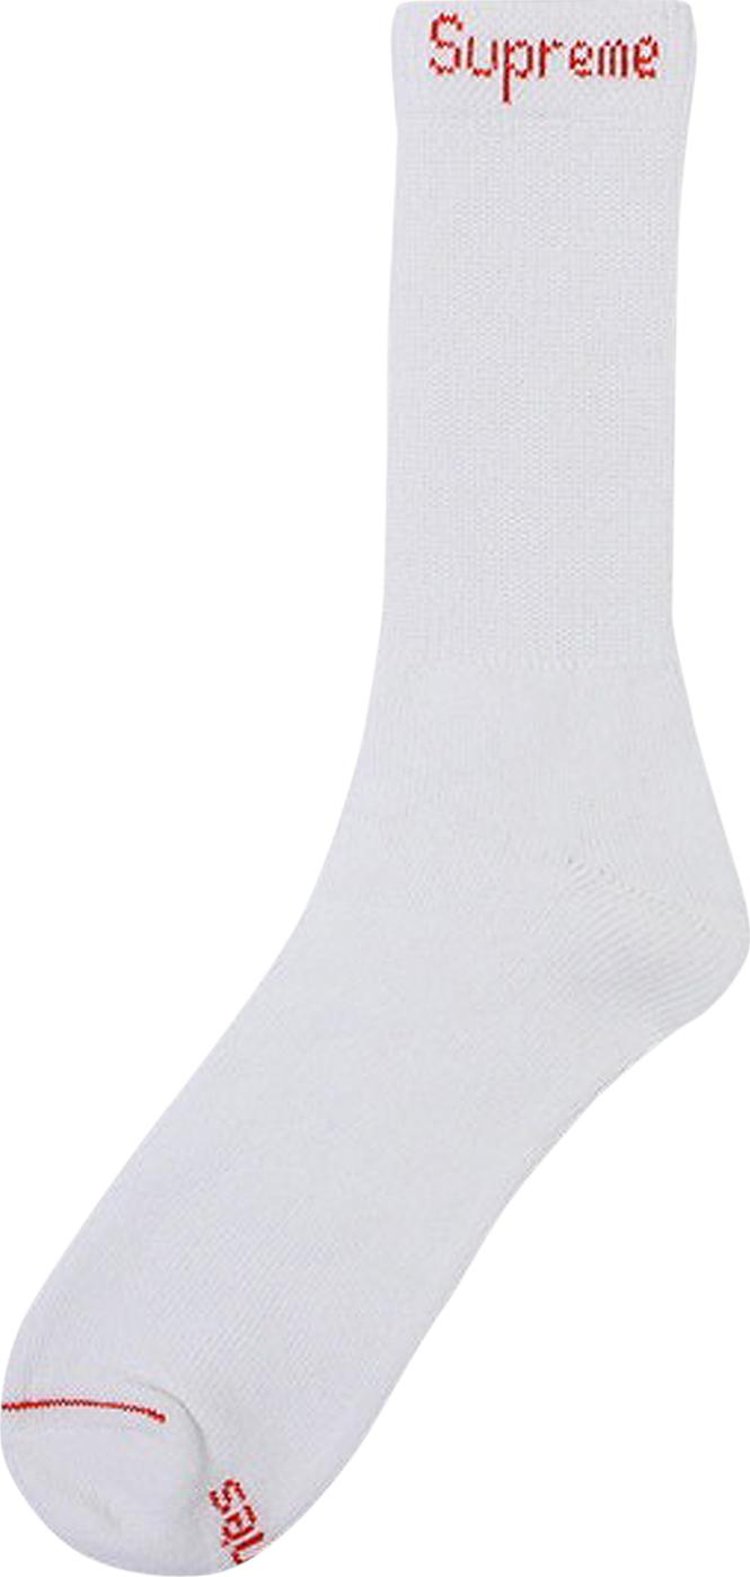 Supreme x Hanes Crew Socks (4 Pack) 'White'